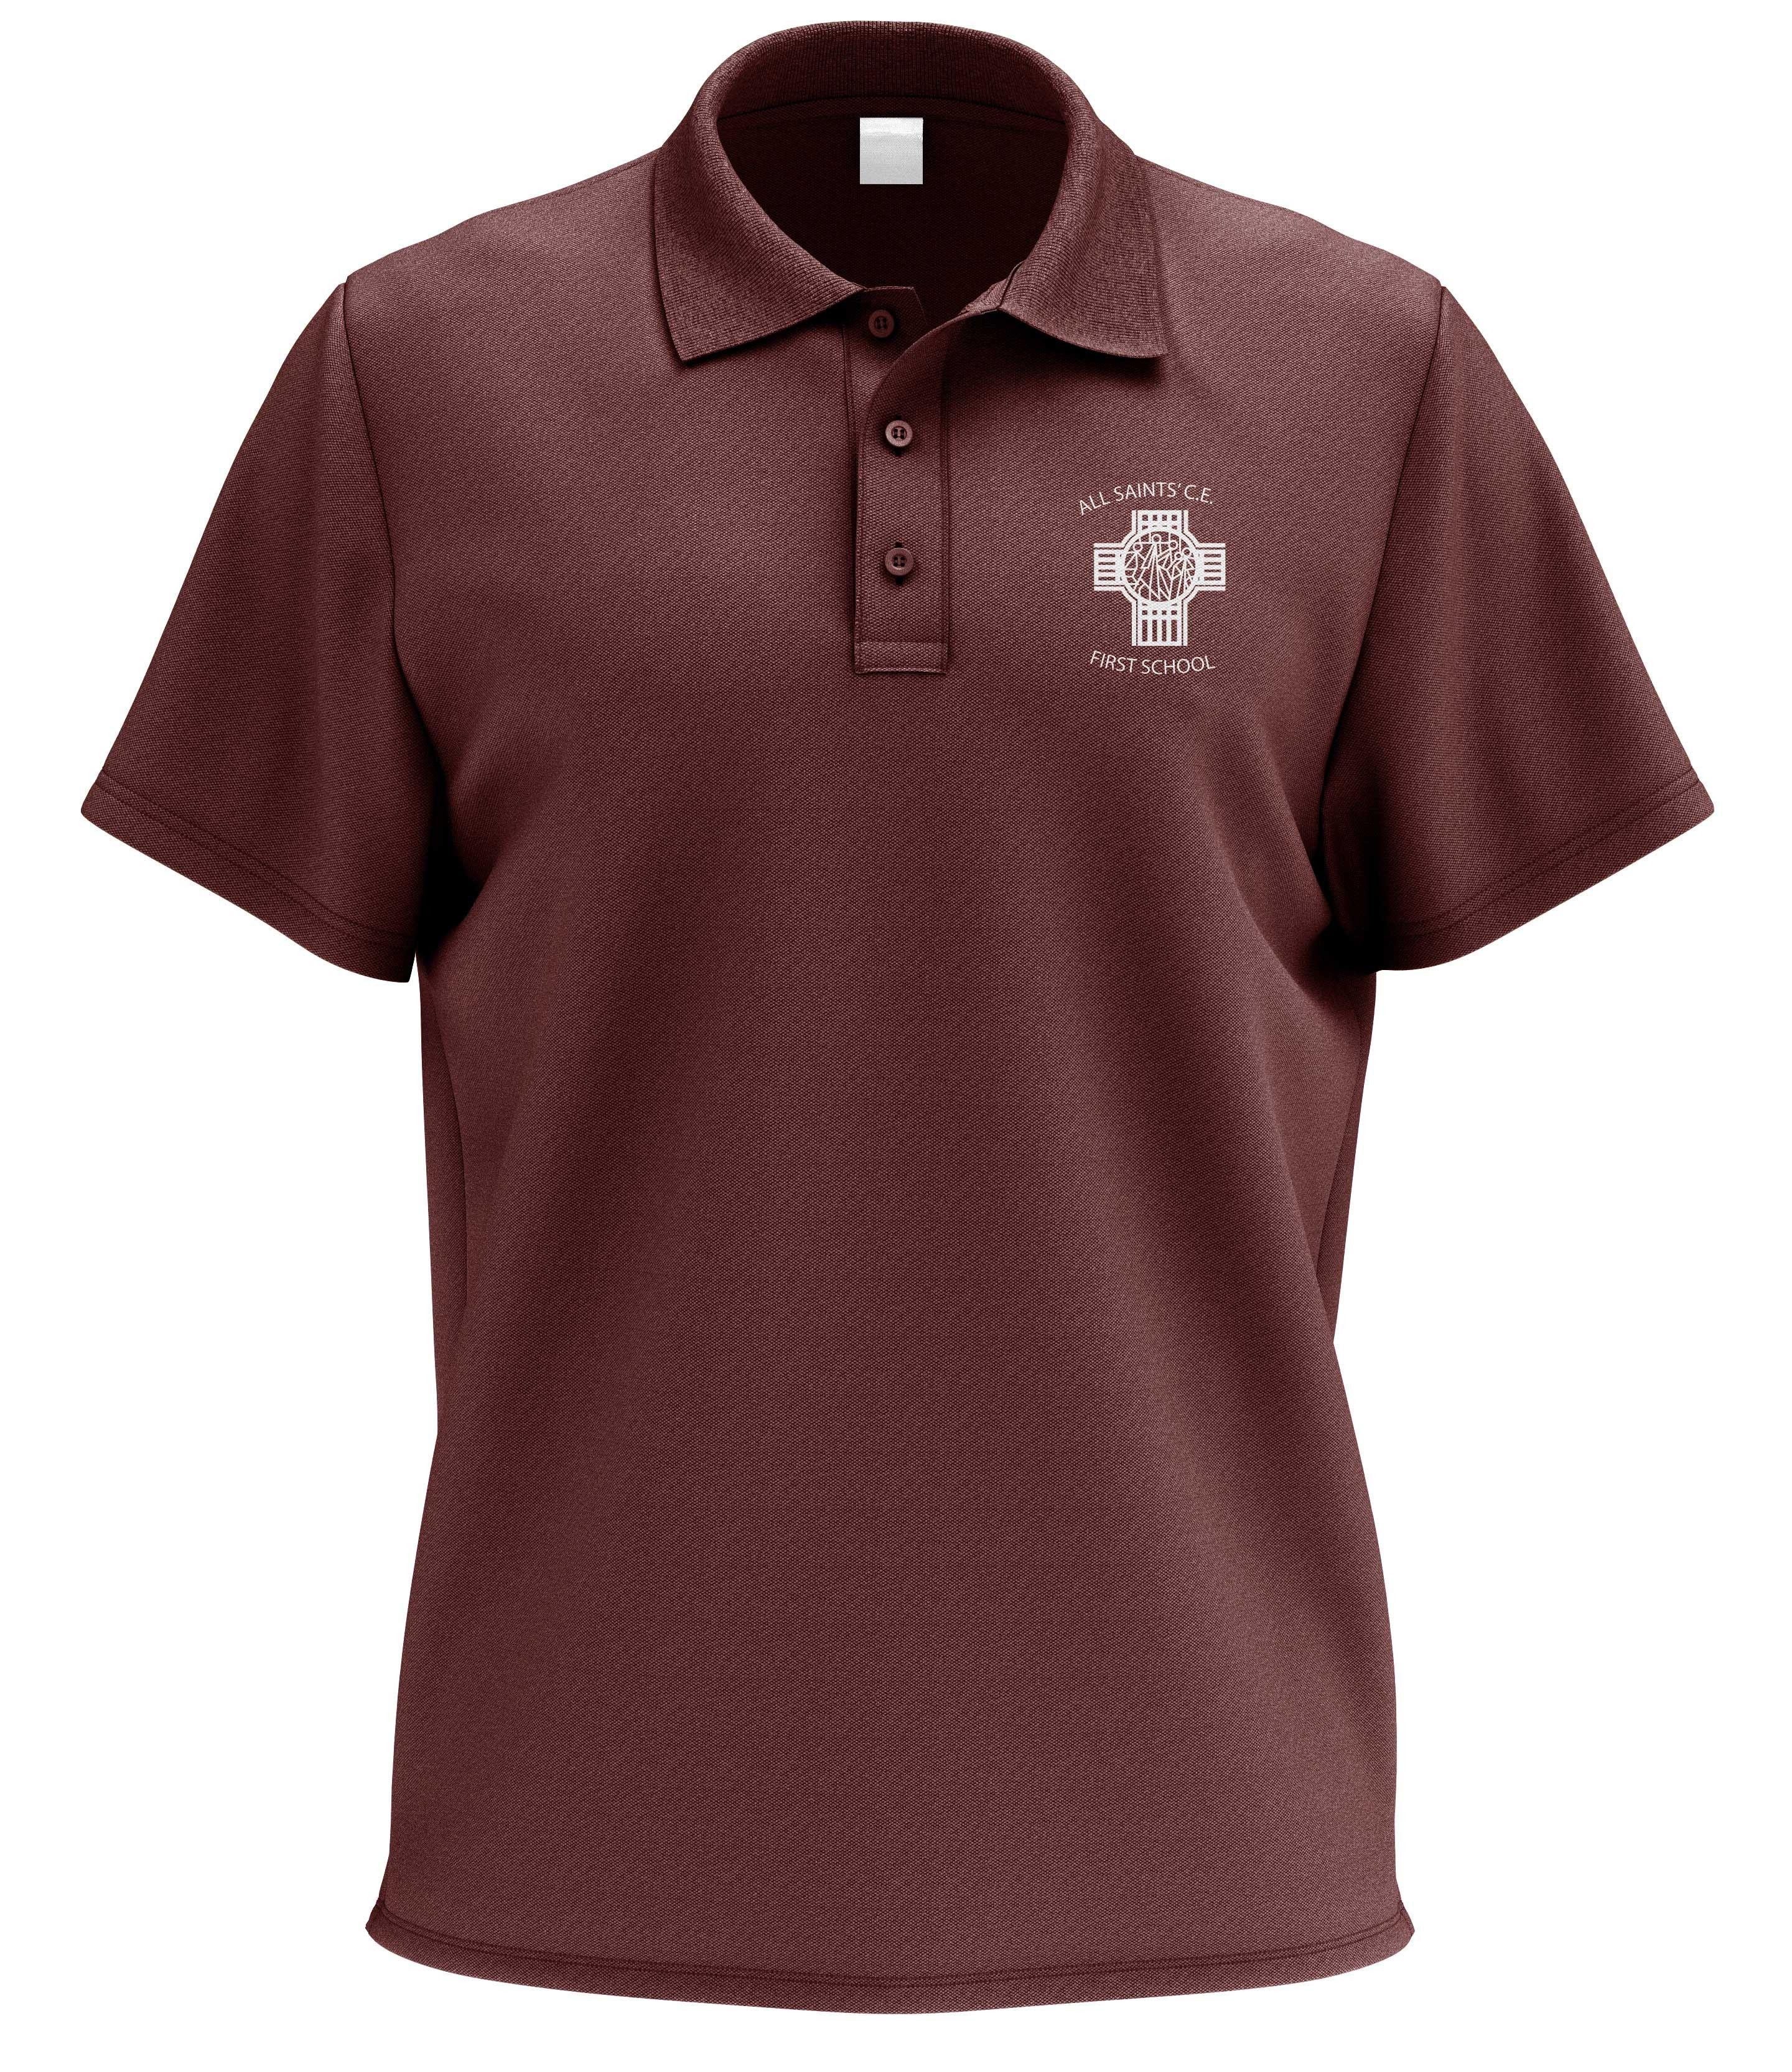 Maroon Polo Logo - School Uniform. All Saints C.E First School Polo